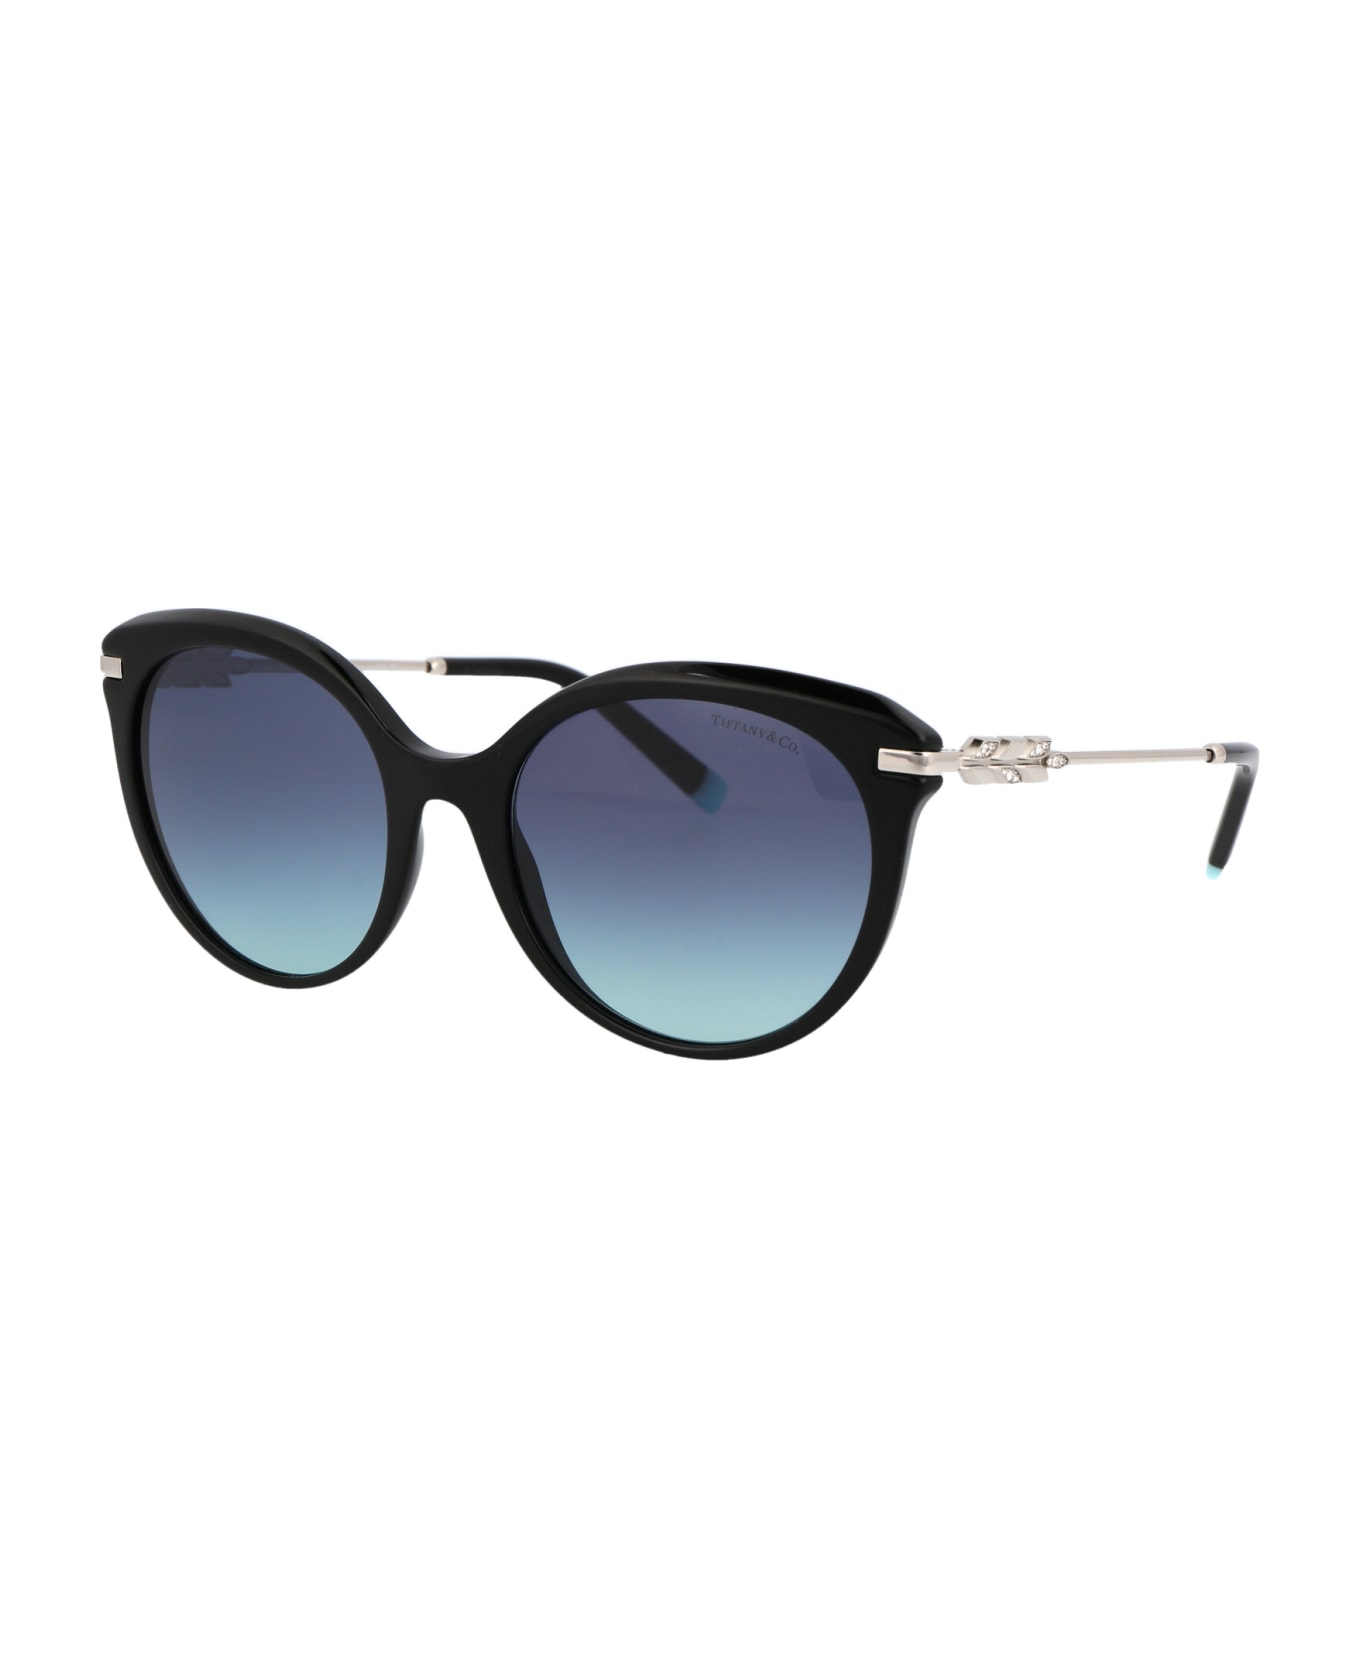 Tiffany & Co. 0tf4189b Sunglasses - 80019S Black